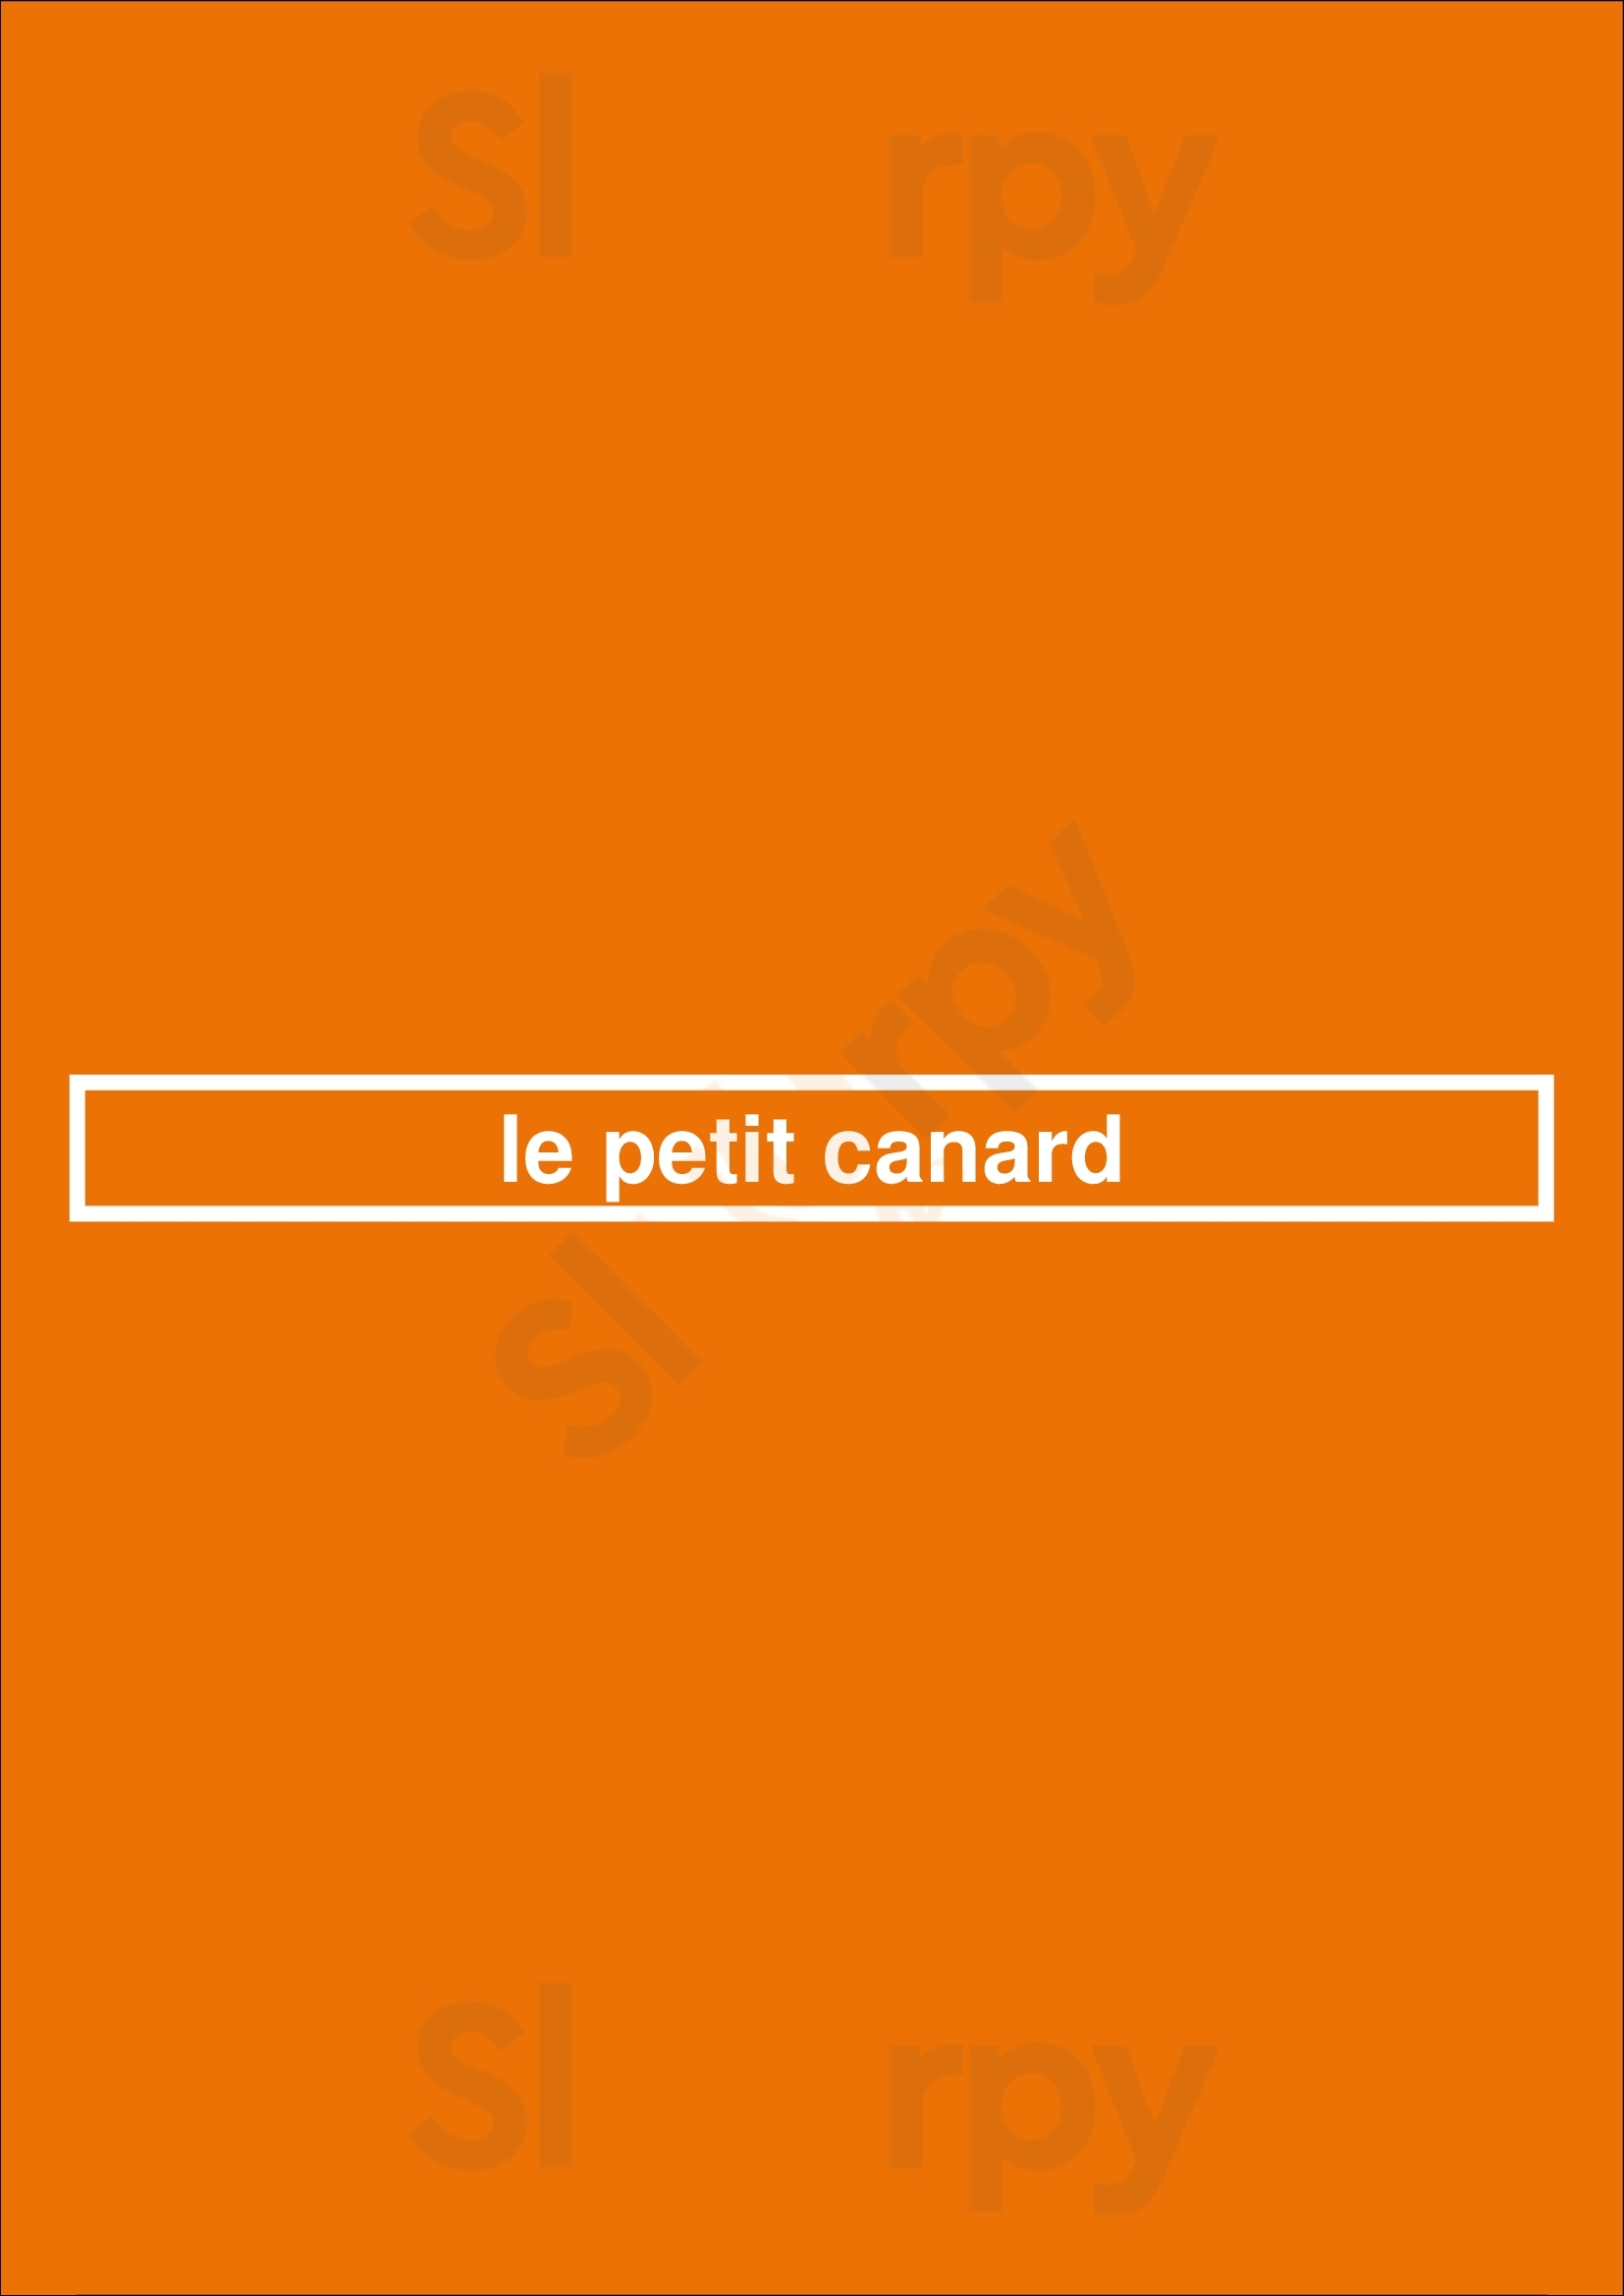 Le Petit Canard Paris Menu - 1